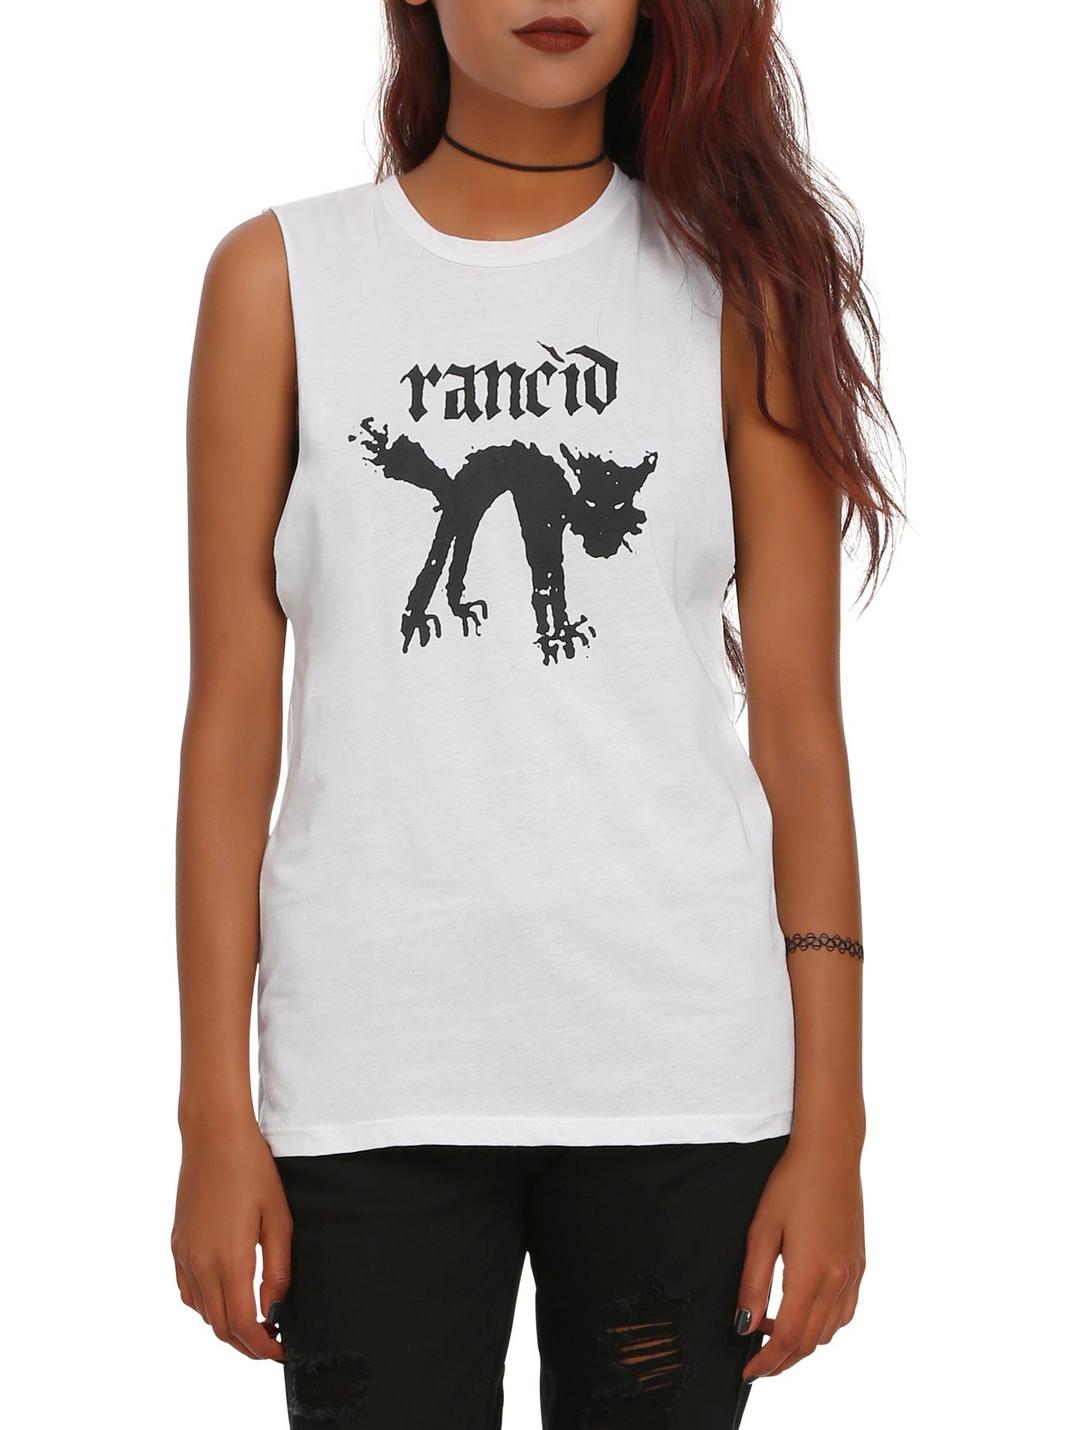 Rancid Black Cat Girls Muscle Top, WHITE, hi-res